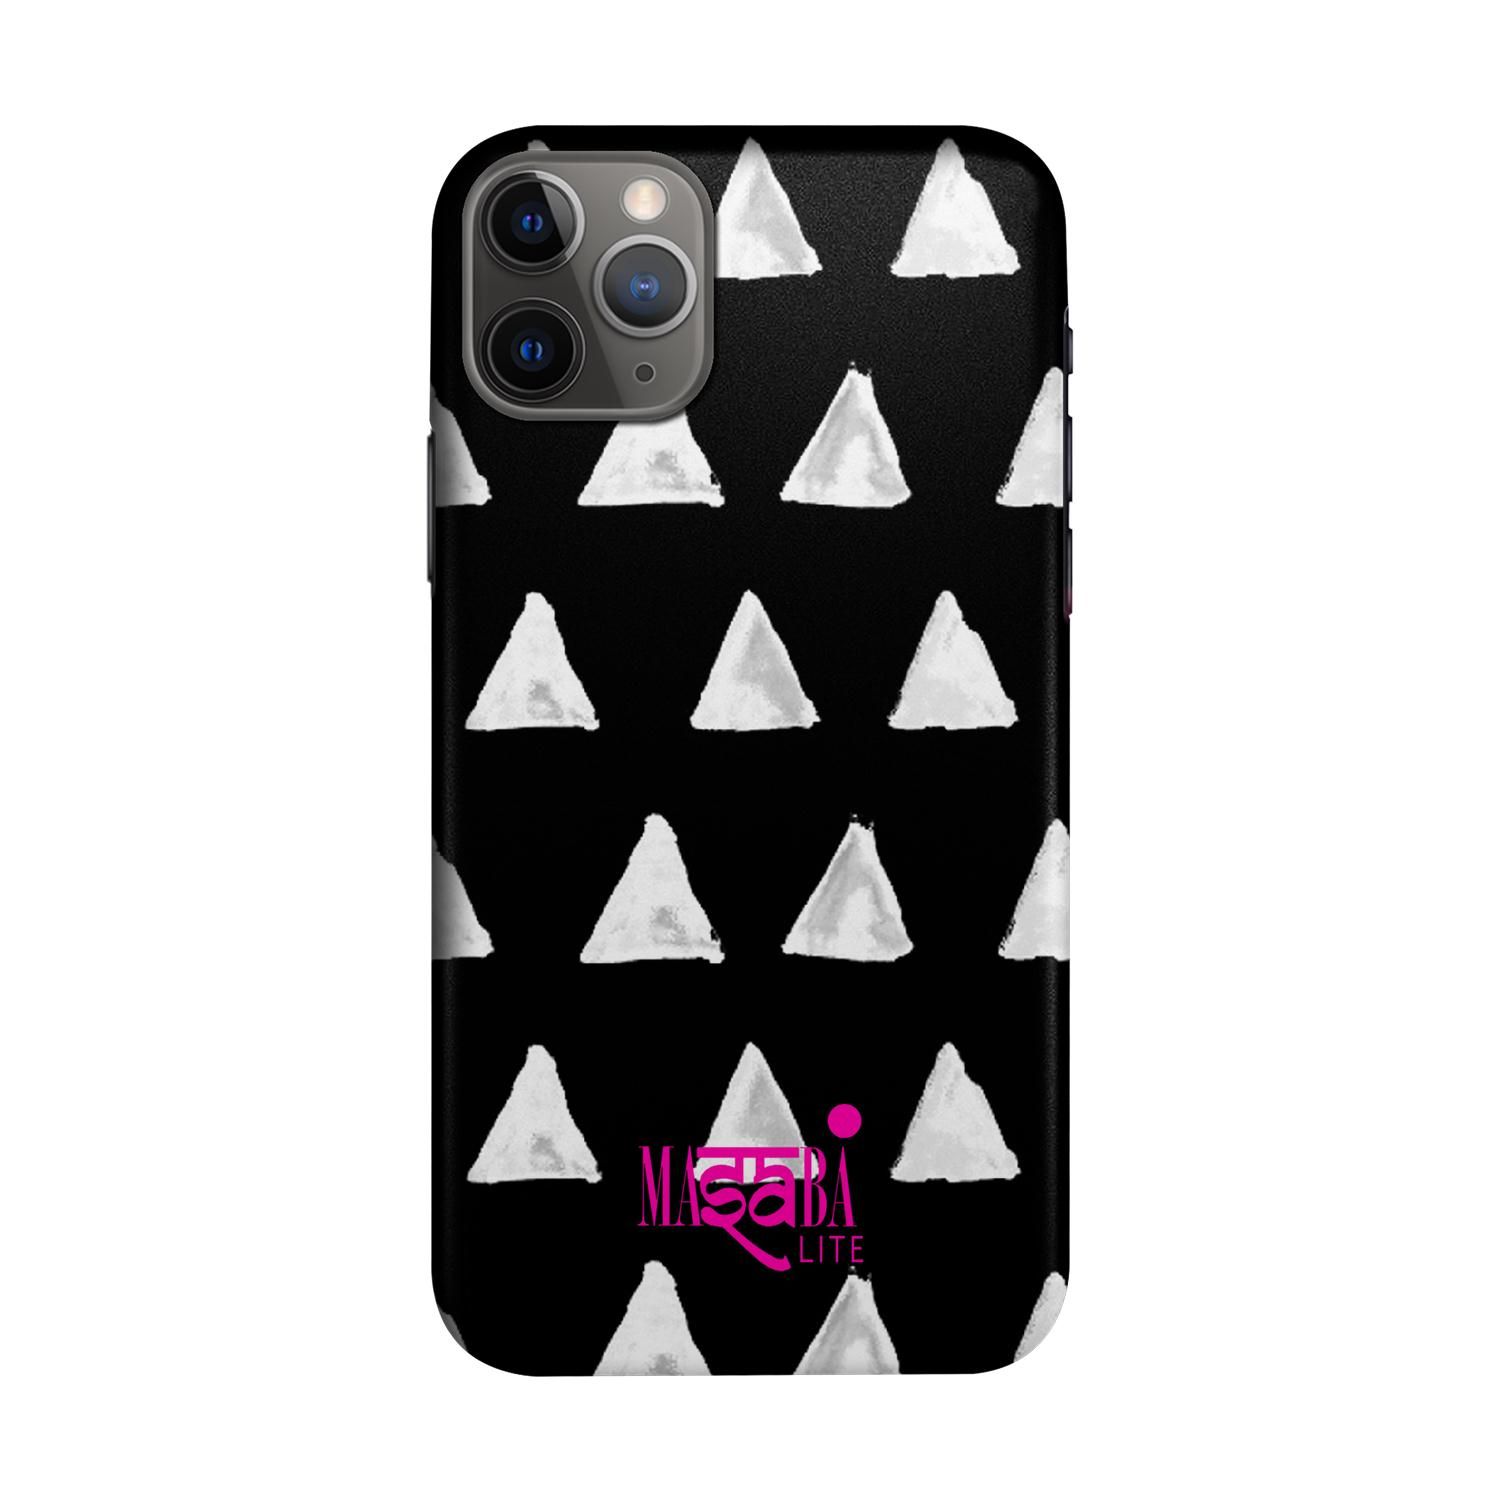 Masaba Black Cone - Sleek Phone Case for iPhone 11 Pro Max